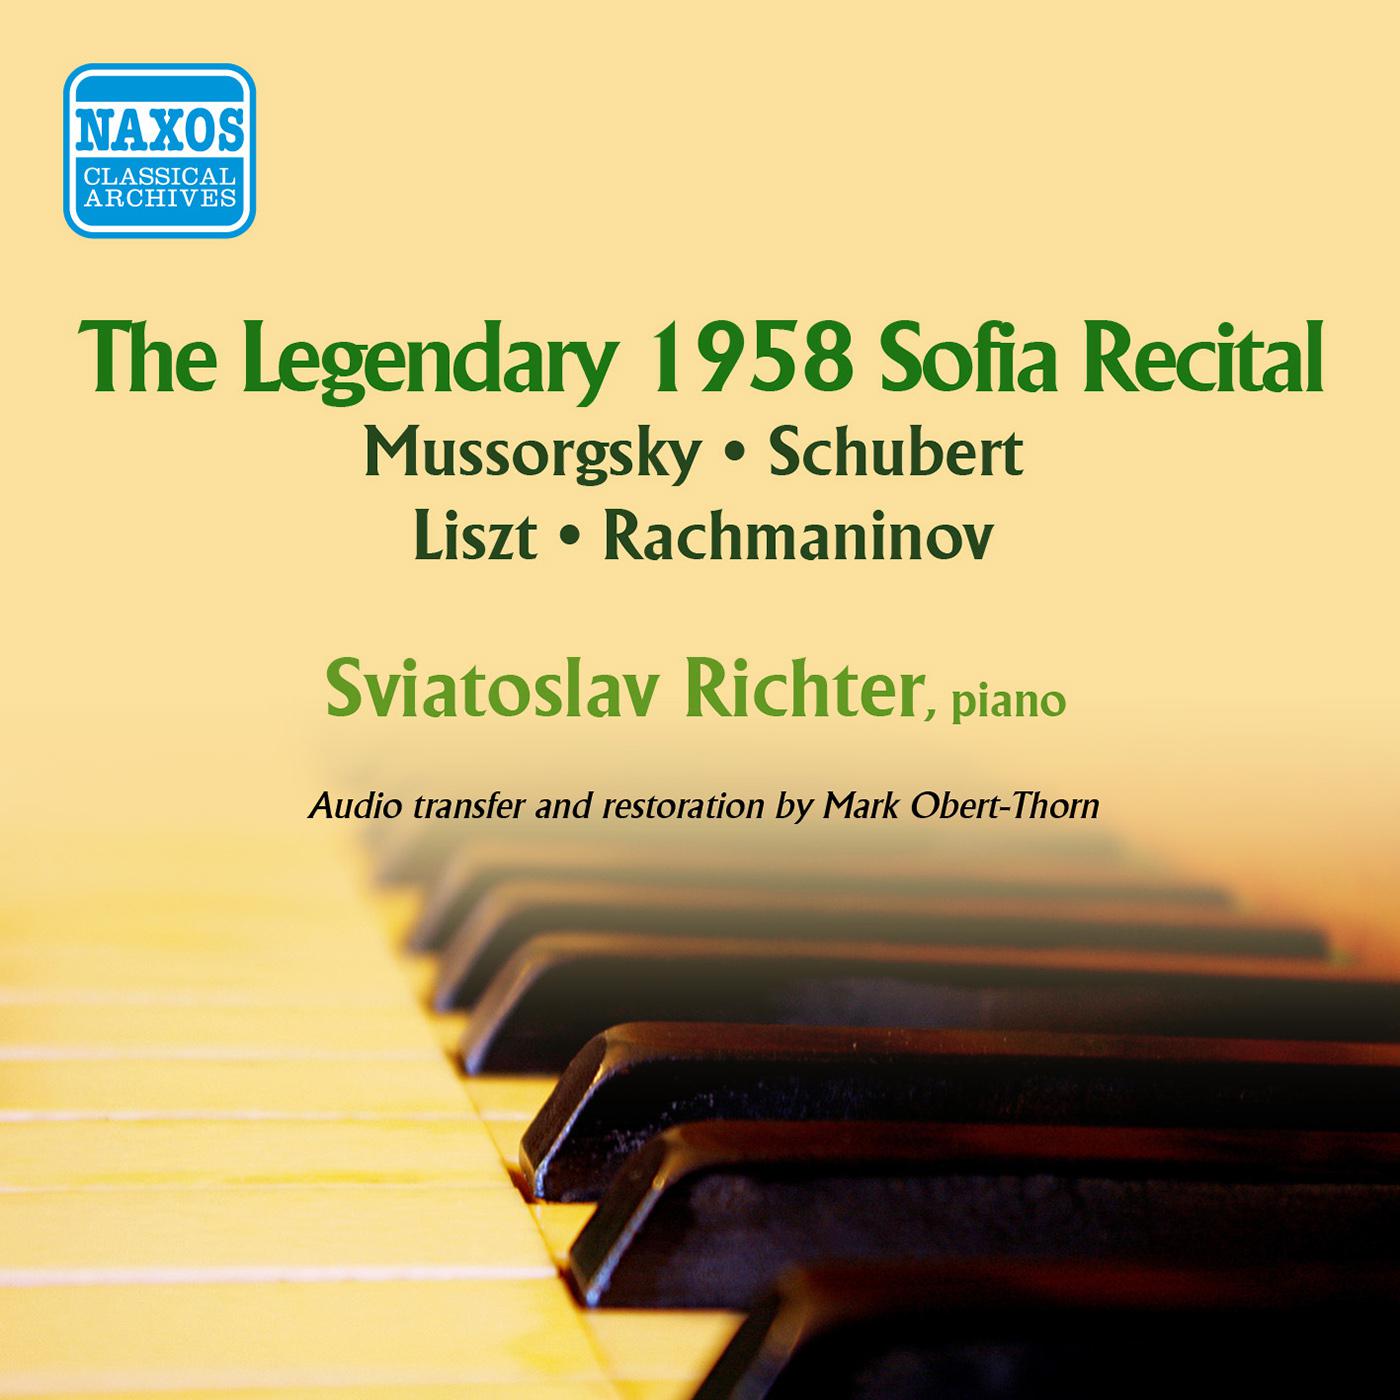 Piano Recital: Richter, Sviatoslav - SCHUBERT, F. / CHOPIN, F. / LISZT, F. / RACHMANINOV, S. / MUSSORGSKY, M.P. (The Legendary 1958 Sofia Recital)